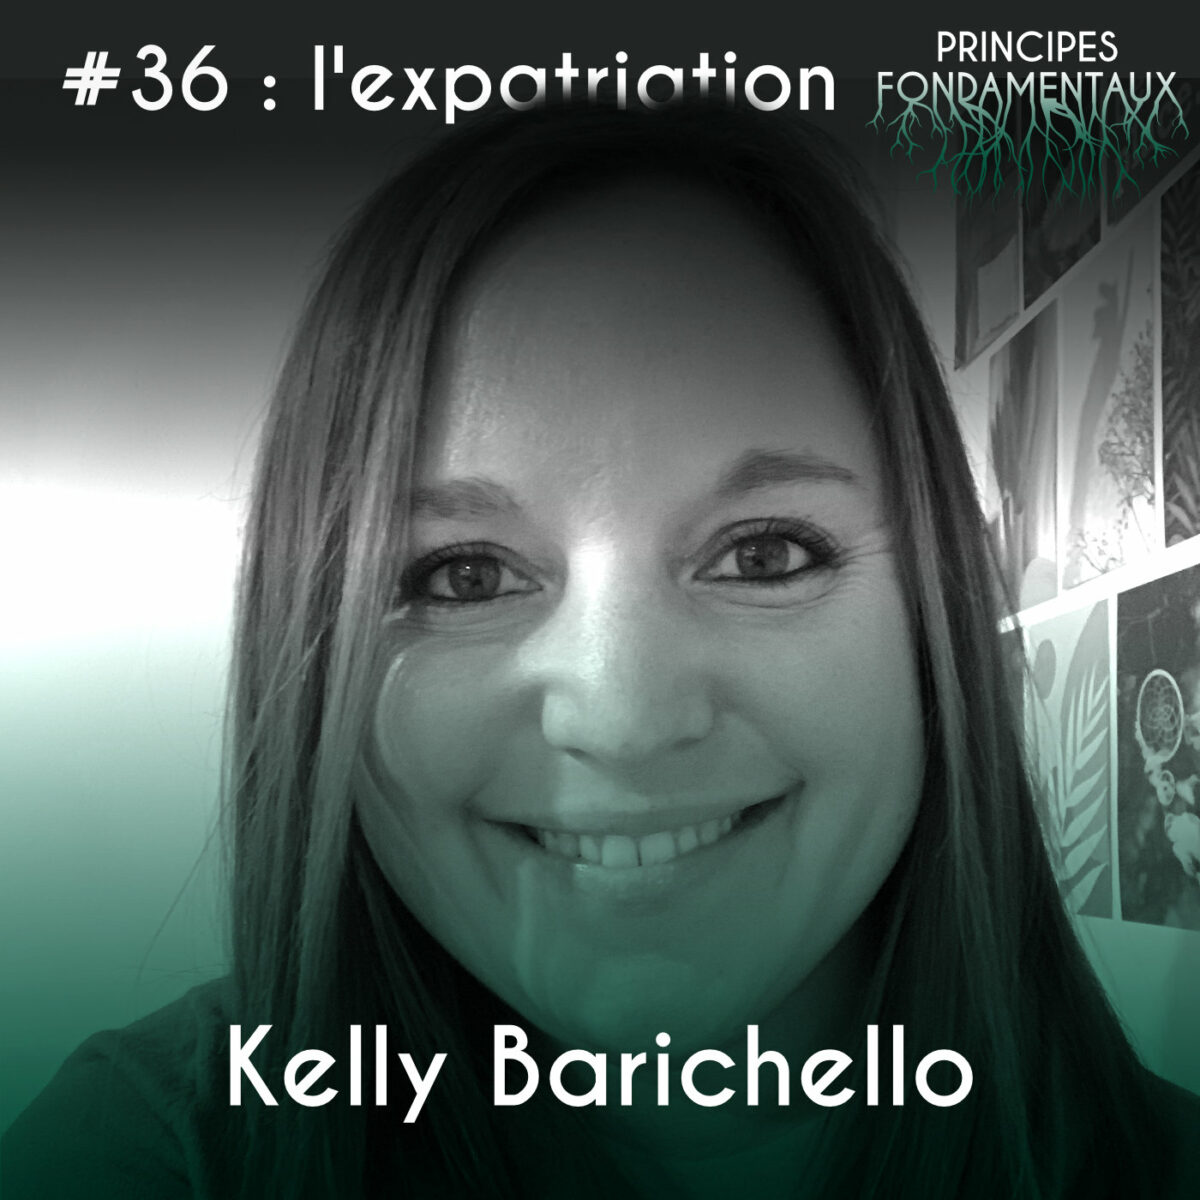 Couverture Podcast #36 : Kelly Barichello - l'expatriation